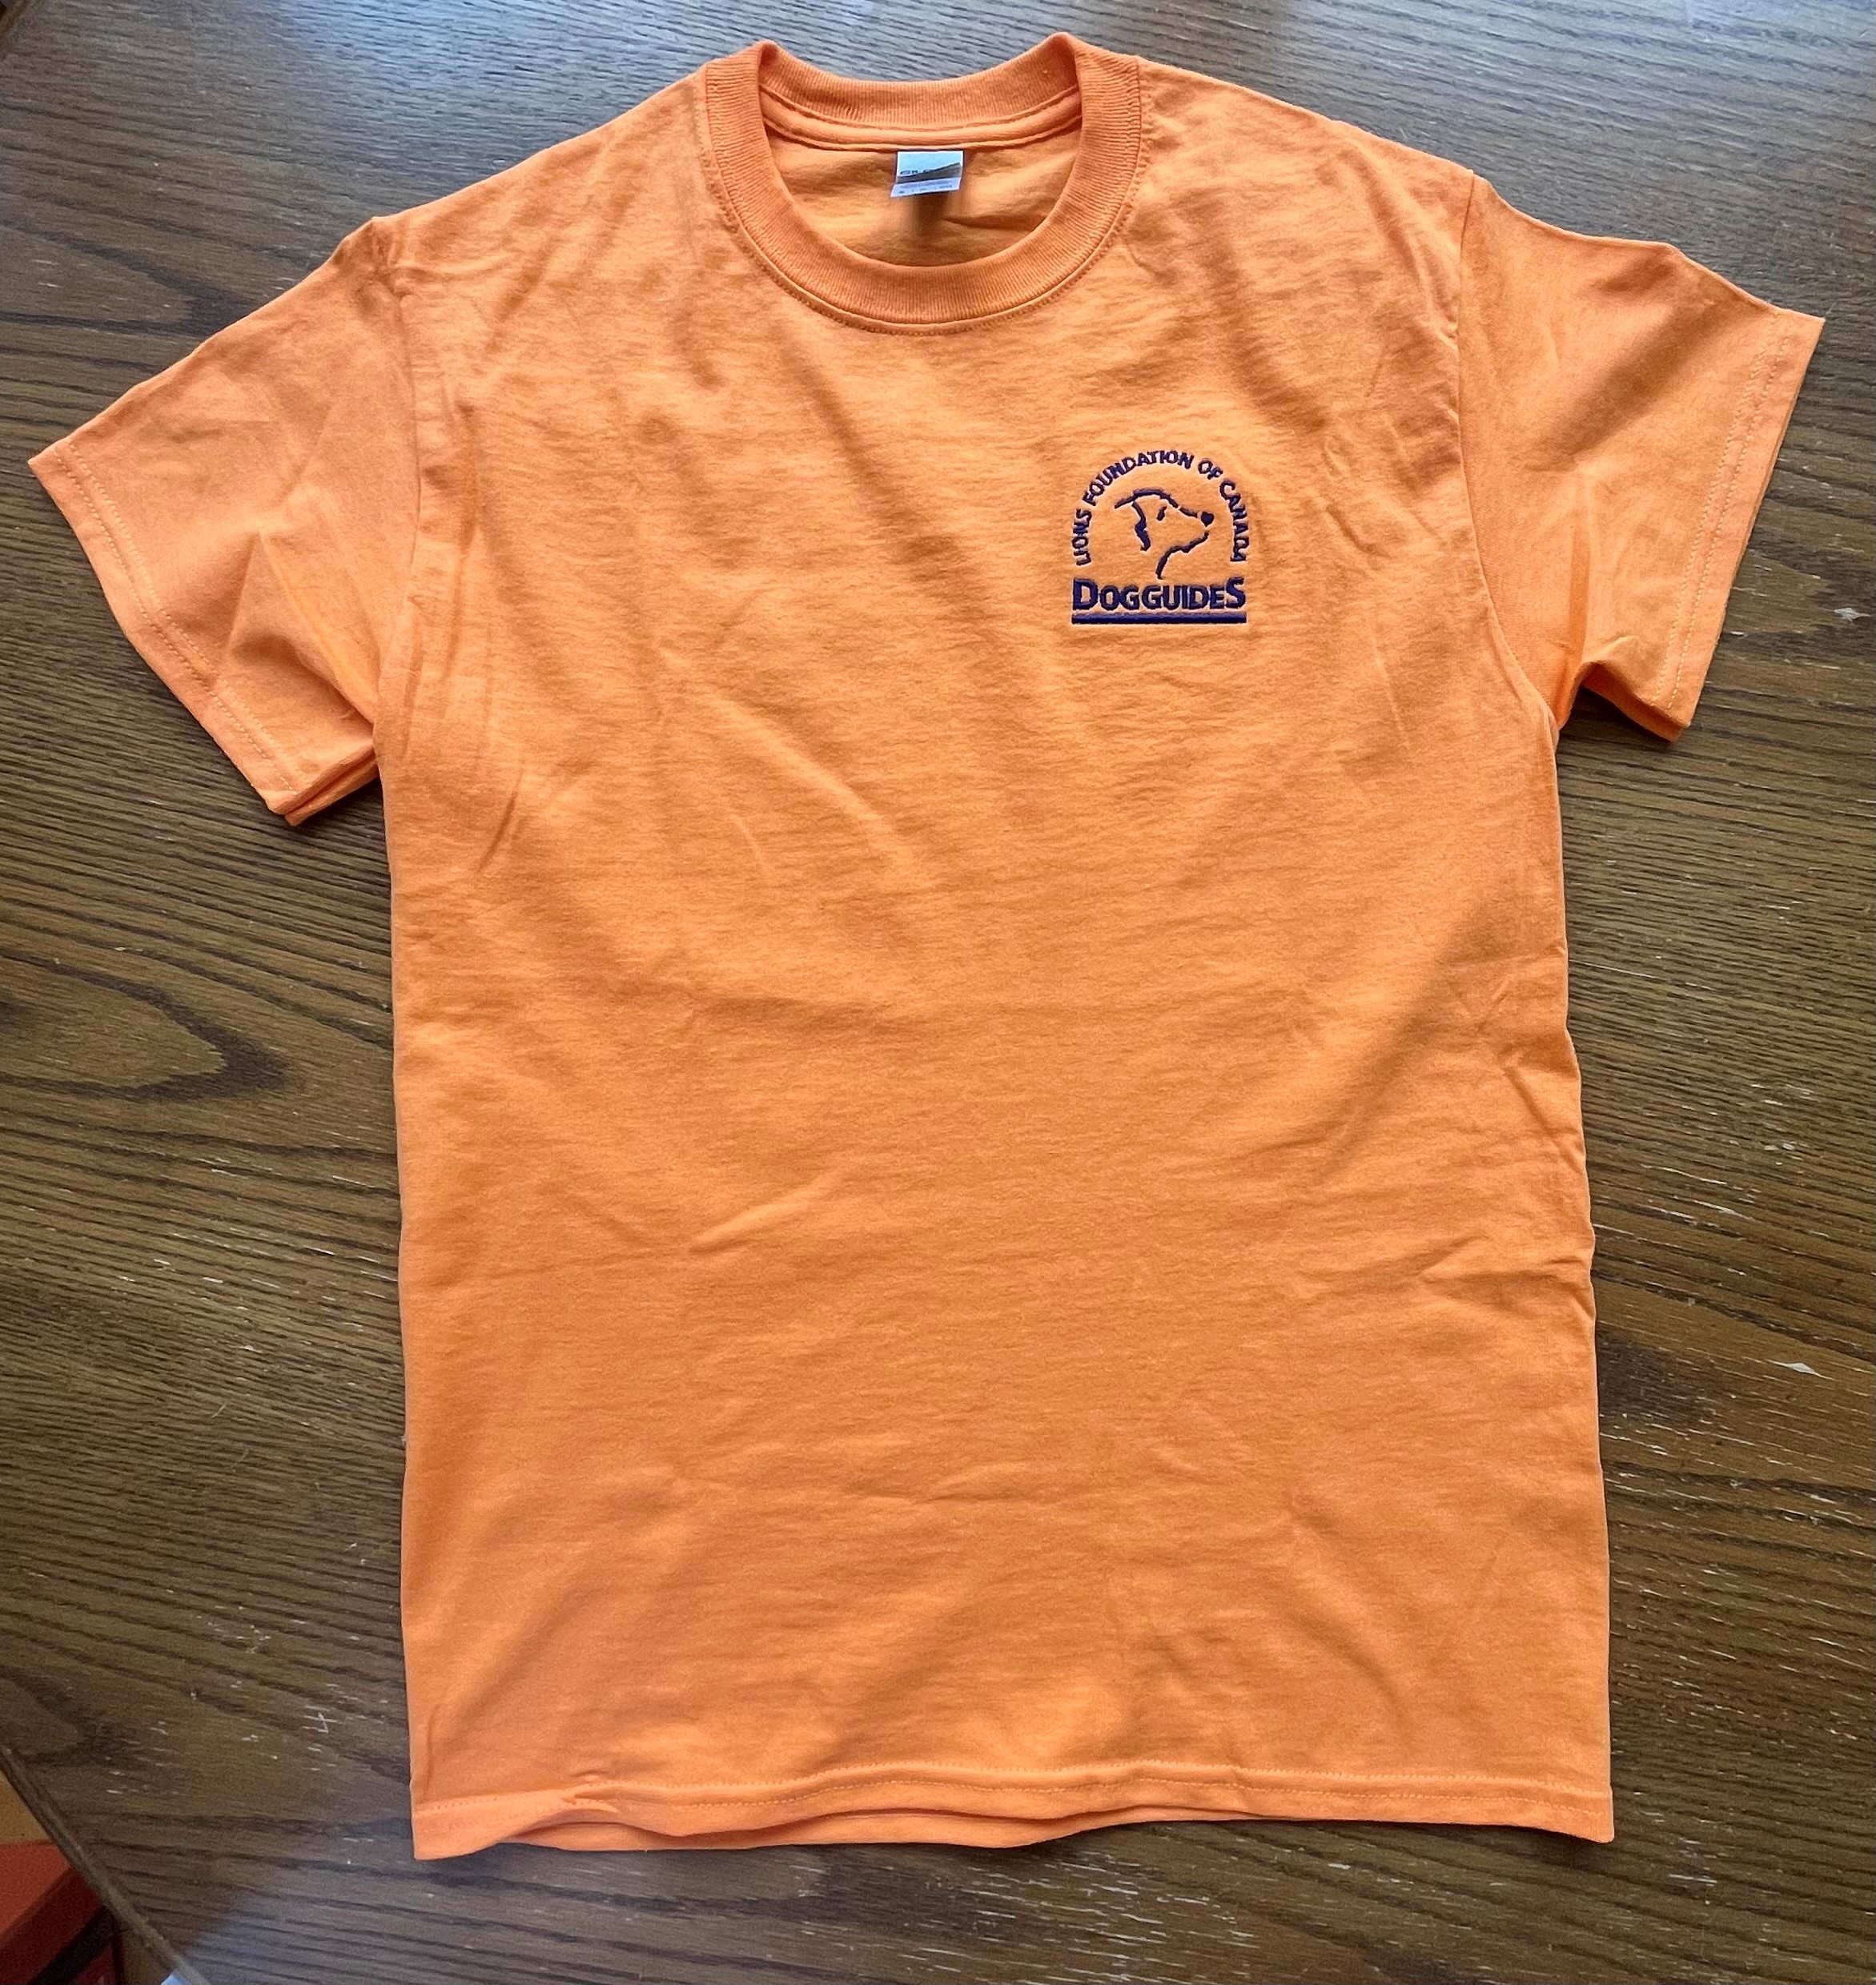 Tangerine t-shirt